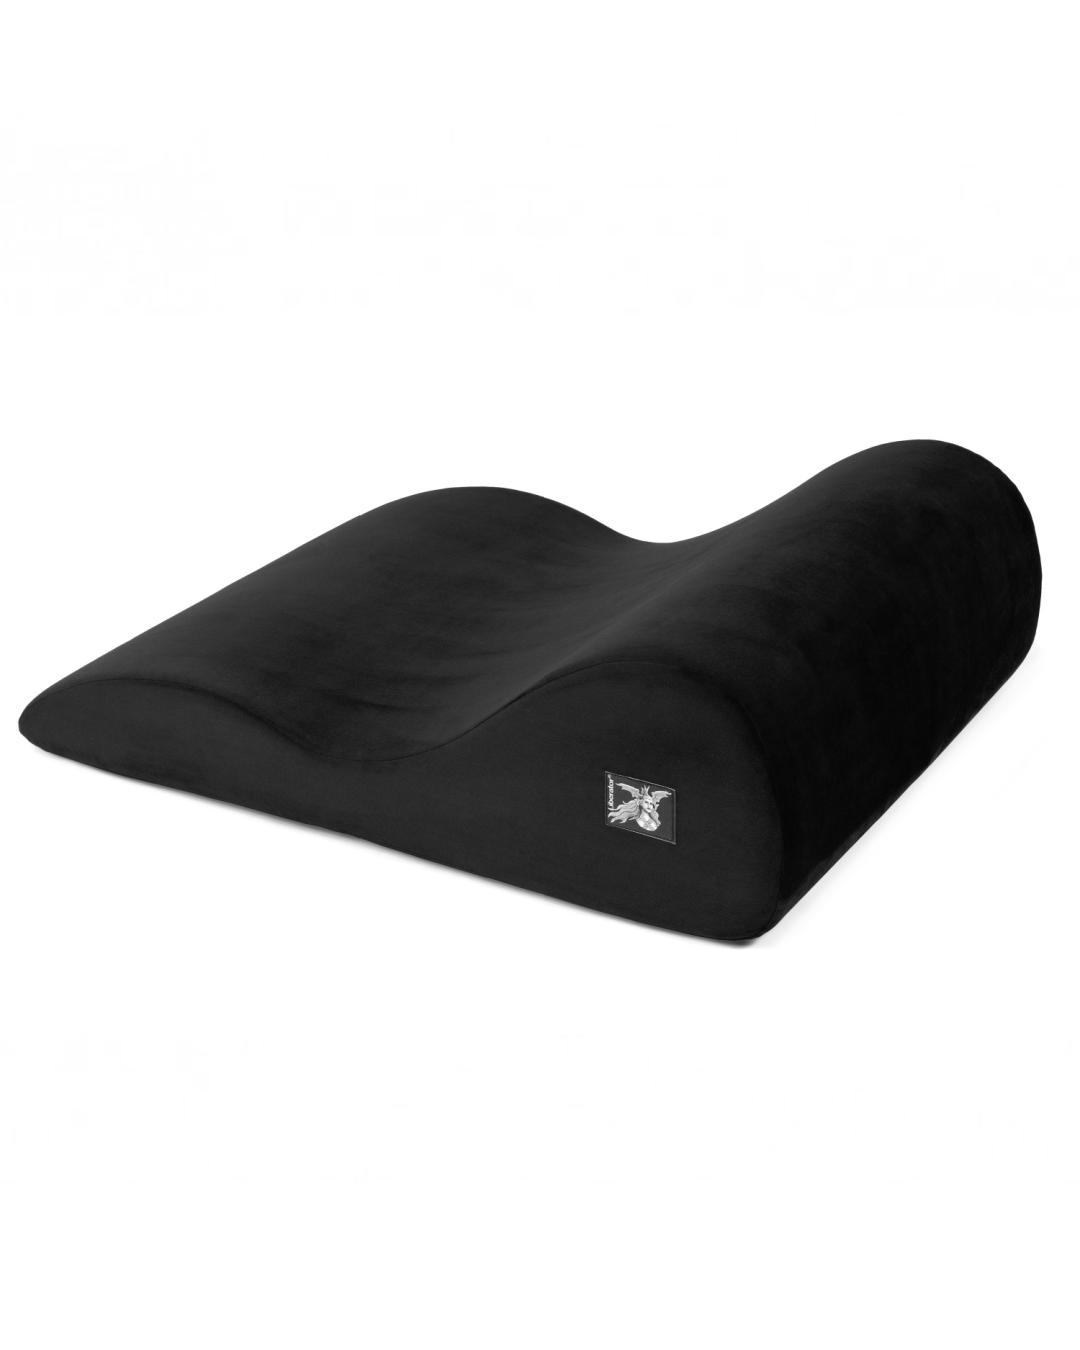 Liberator Hipster Ergonomic Waterproof Black Sex Positioning Cushion 